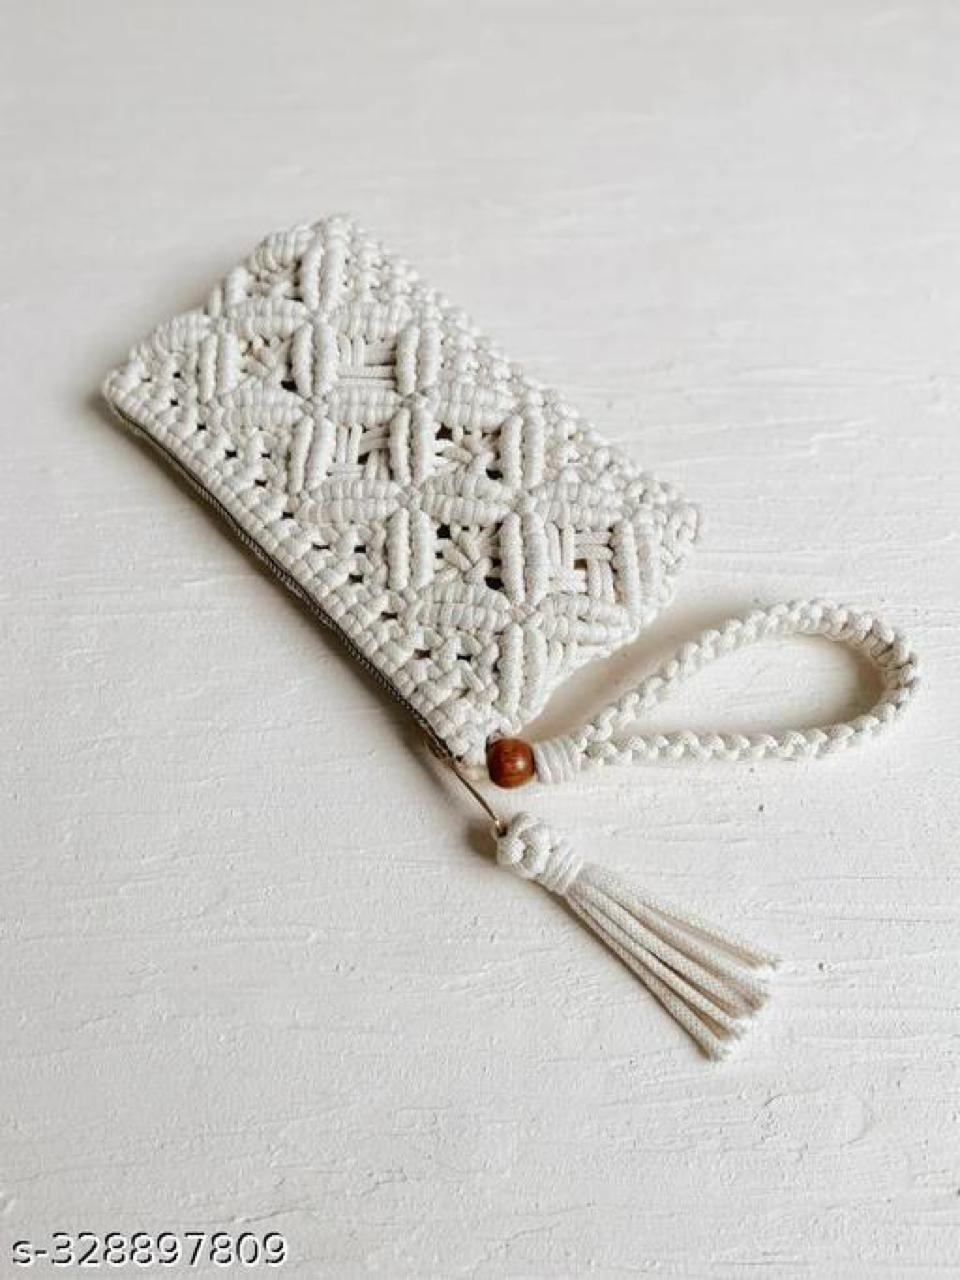 Crochet Tassel Handbag Straw Envelope Clutch Bag Cotton Macrame Purse Hobo Hand-